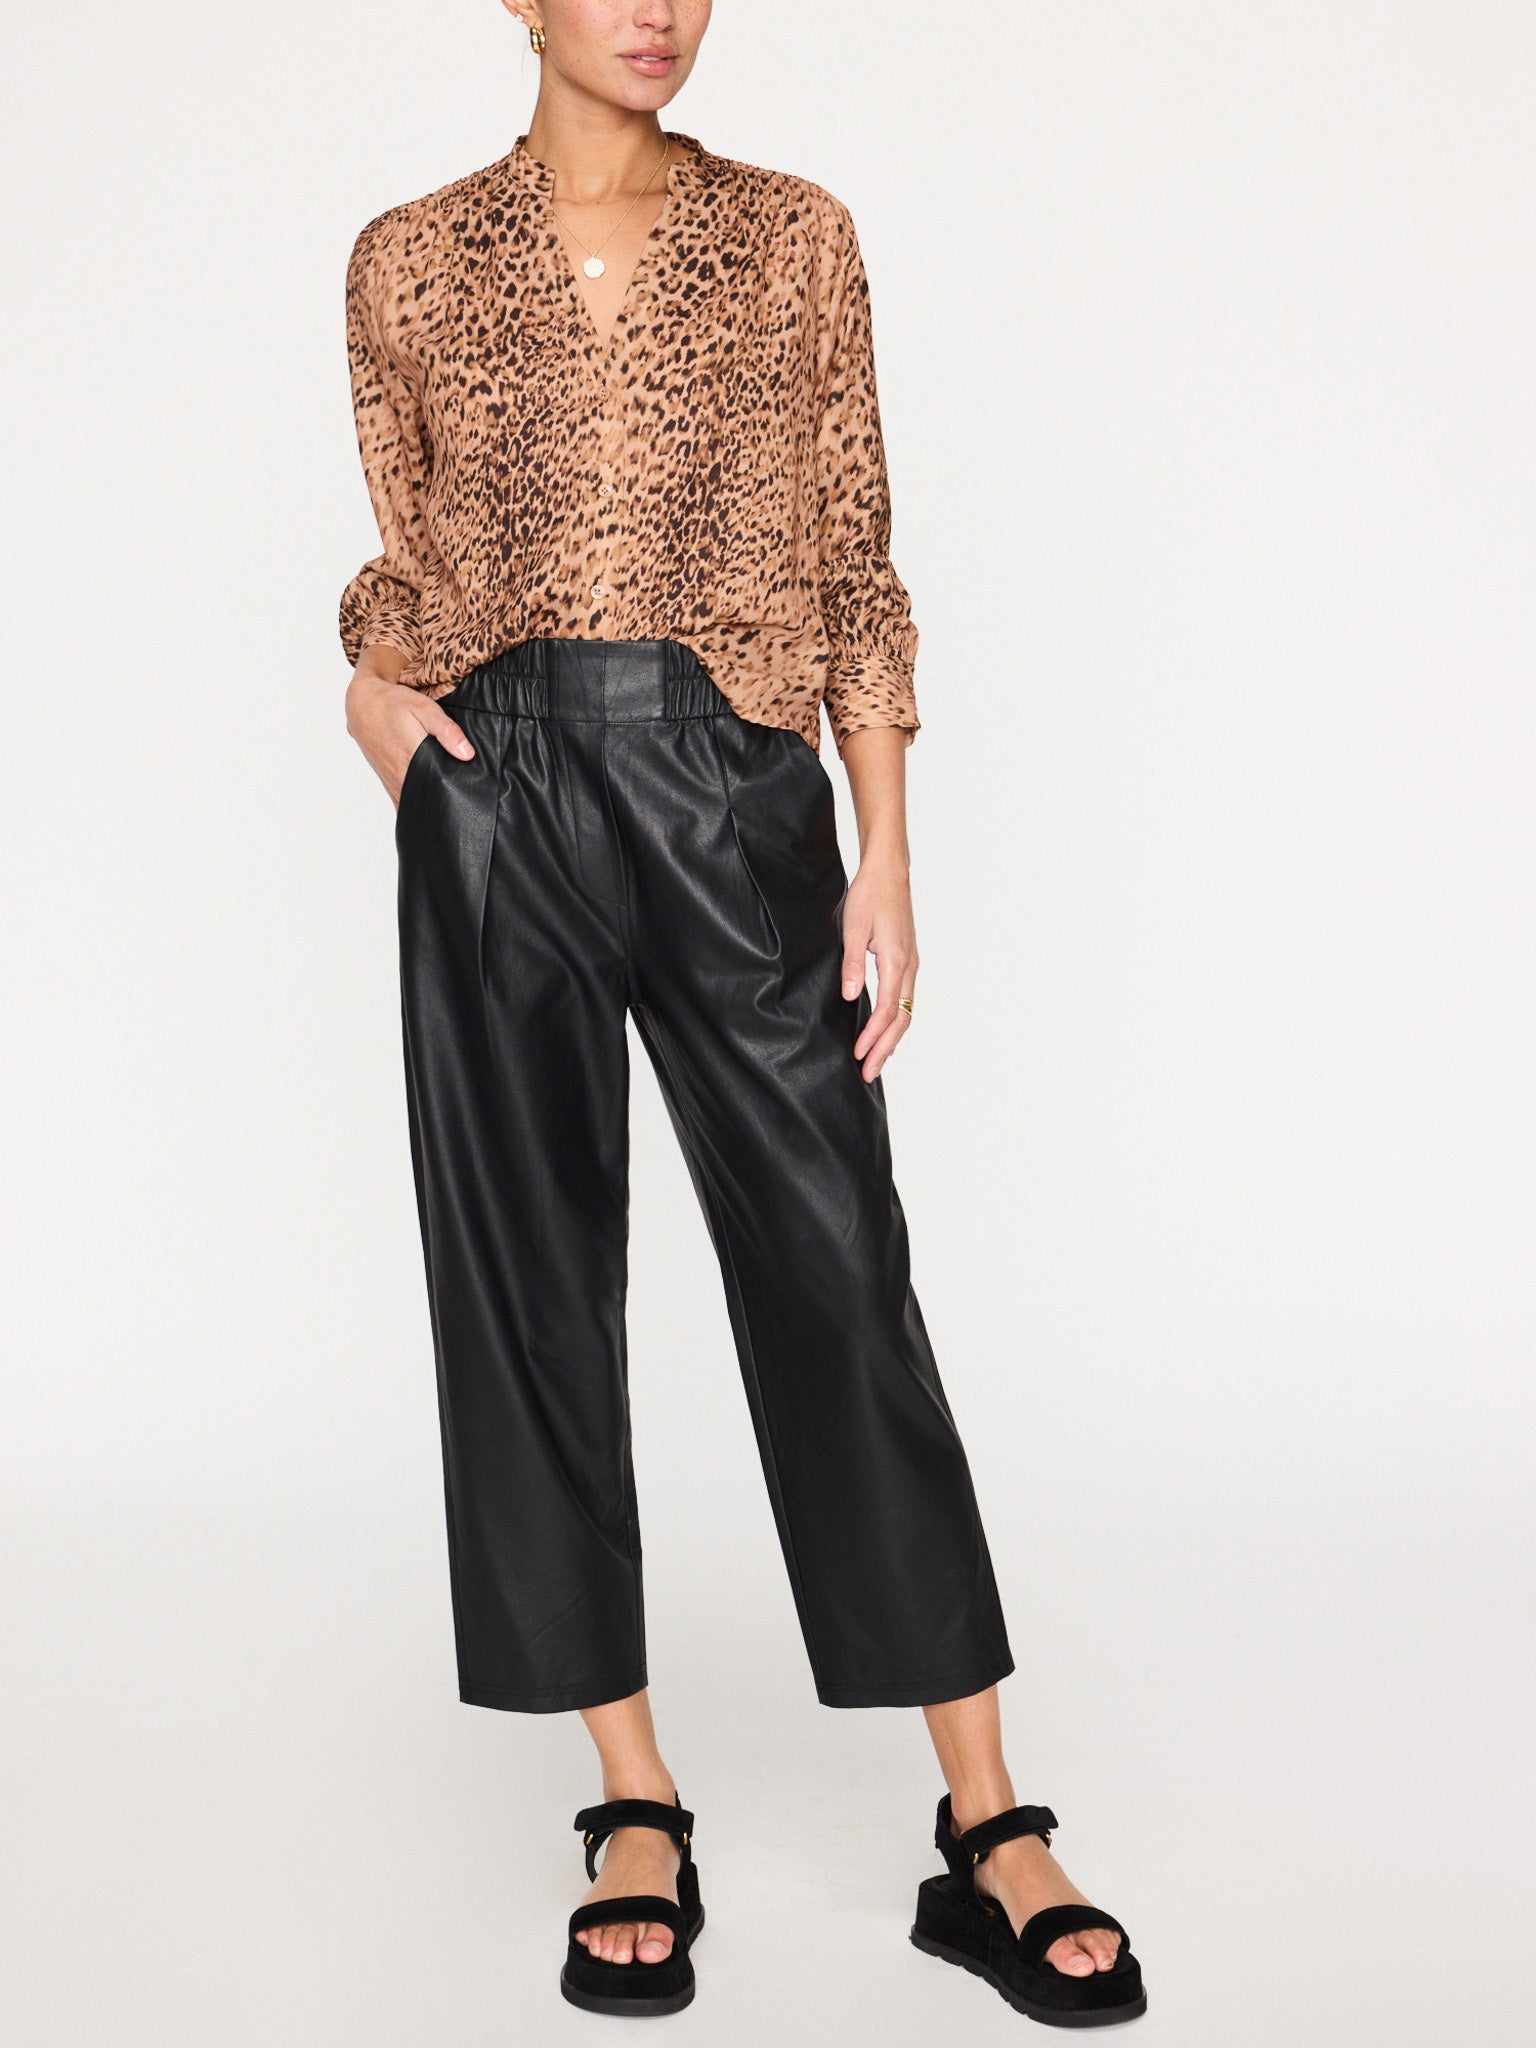 Ember blouse leopard print full view